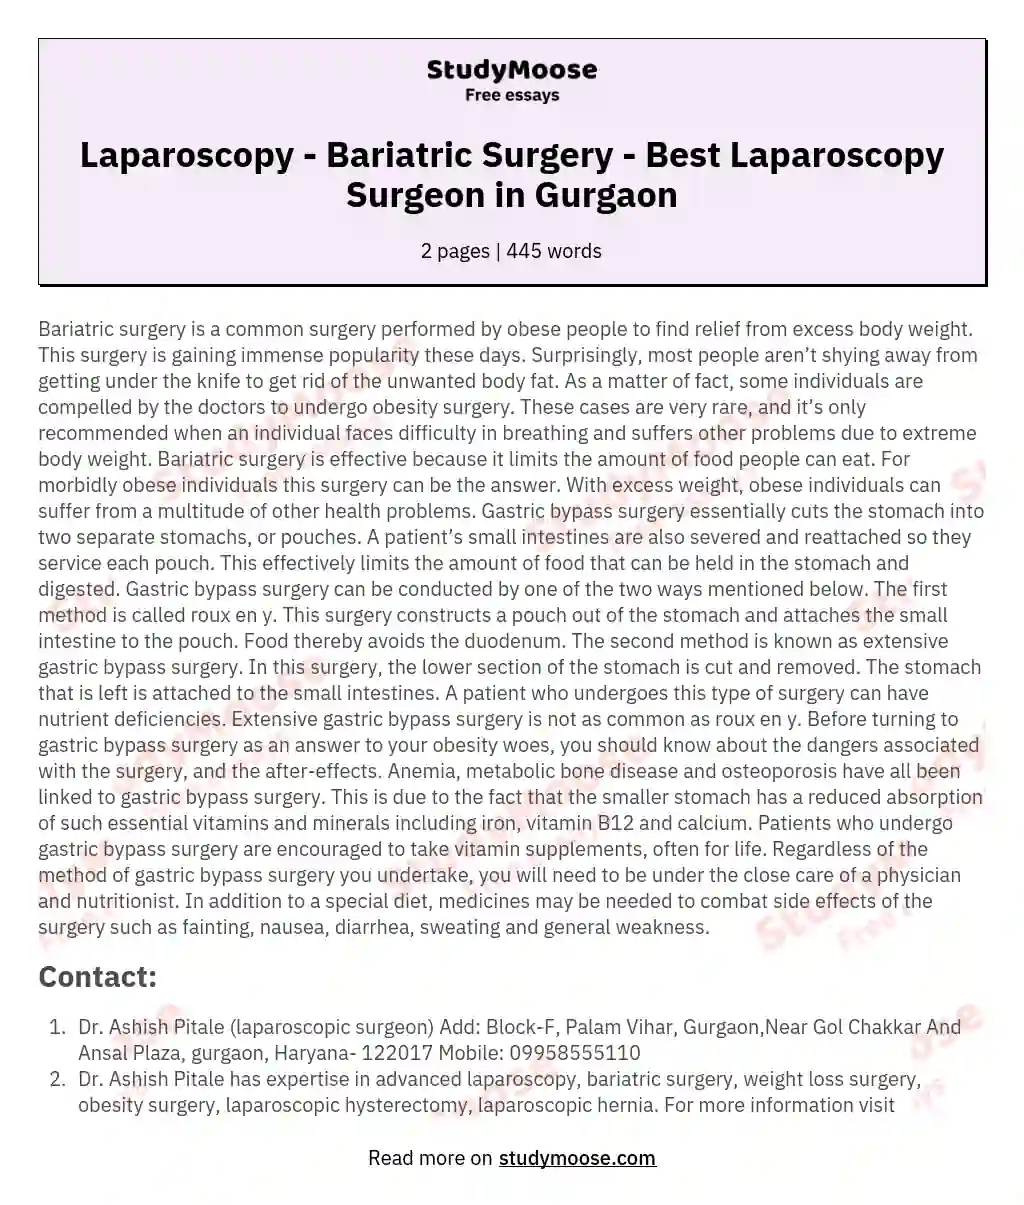 Laparoscopy - Bariatric Surgery - Best Laparoscopy Surgeon in Gurgaon